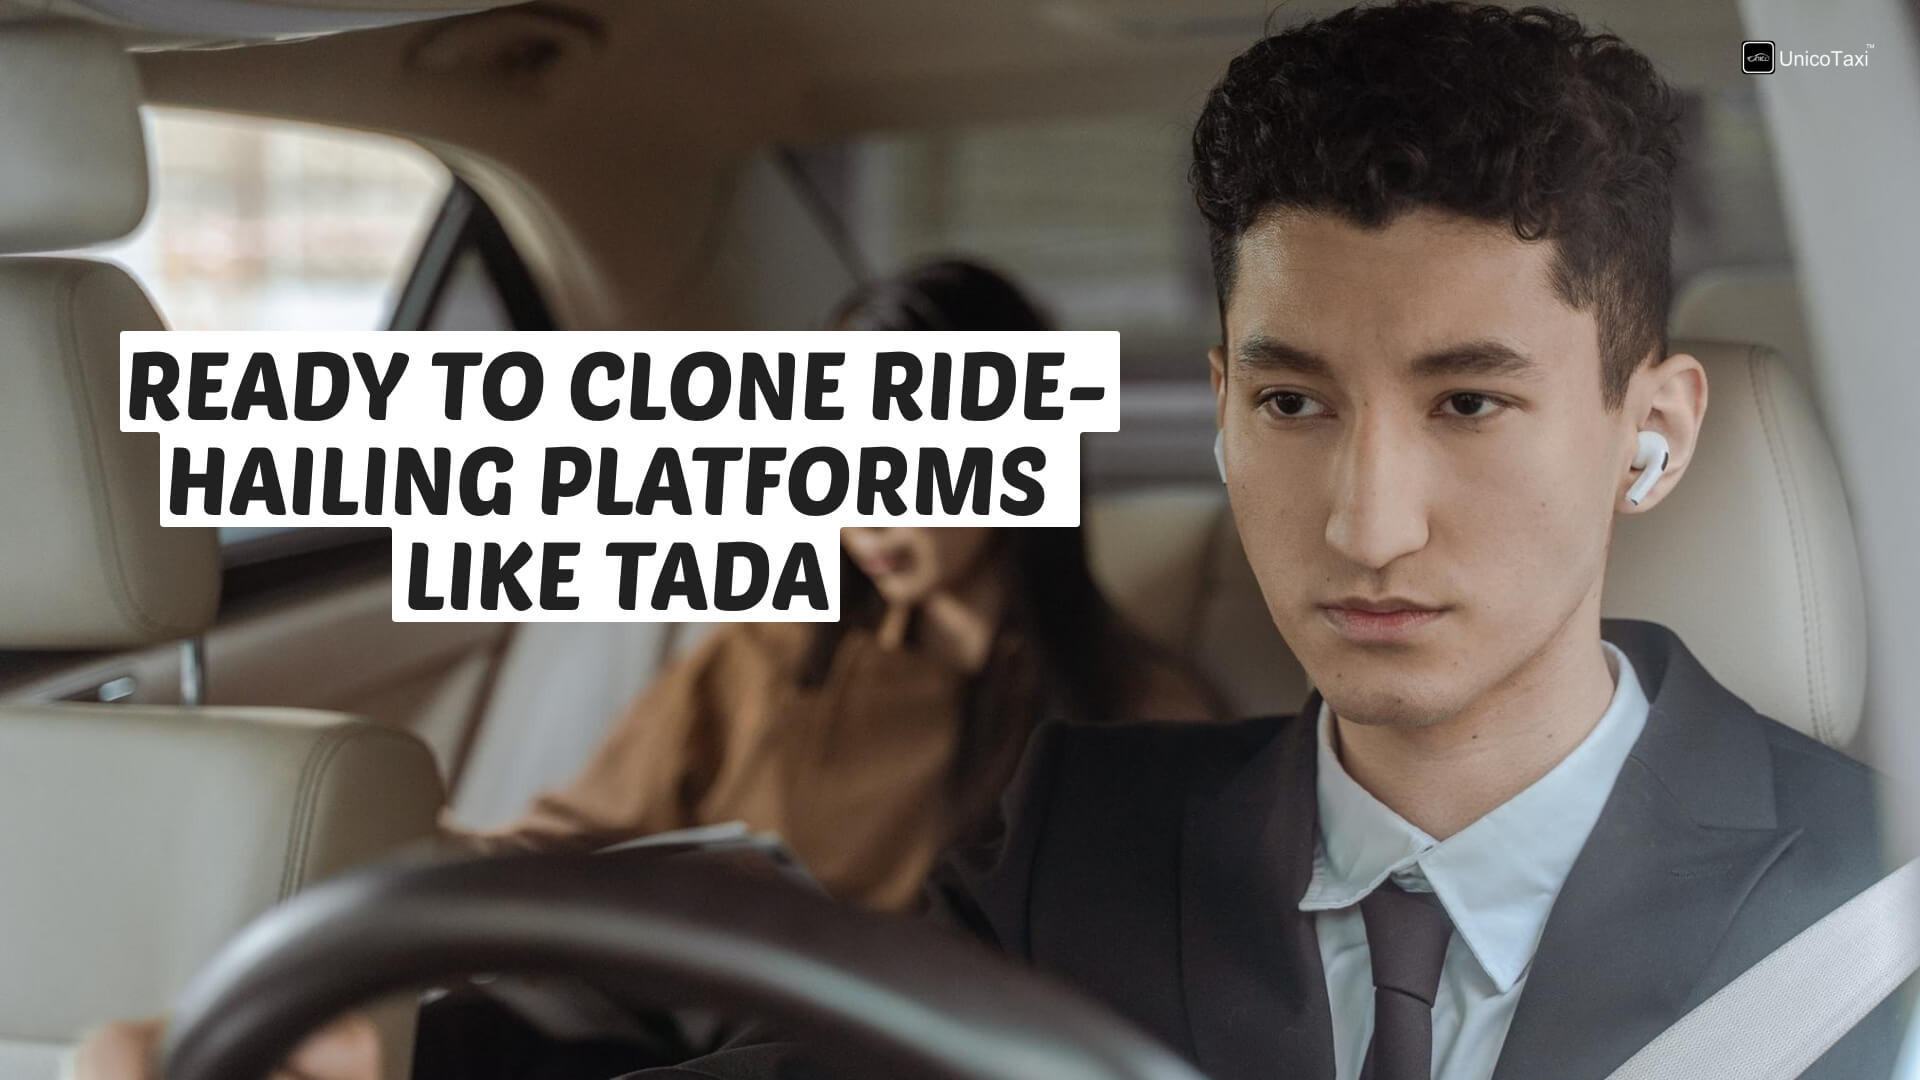 TADA Clone: Are You Ready to Clone Ride-Hailing Platforms Like TADA?